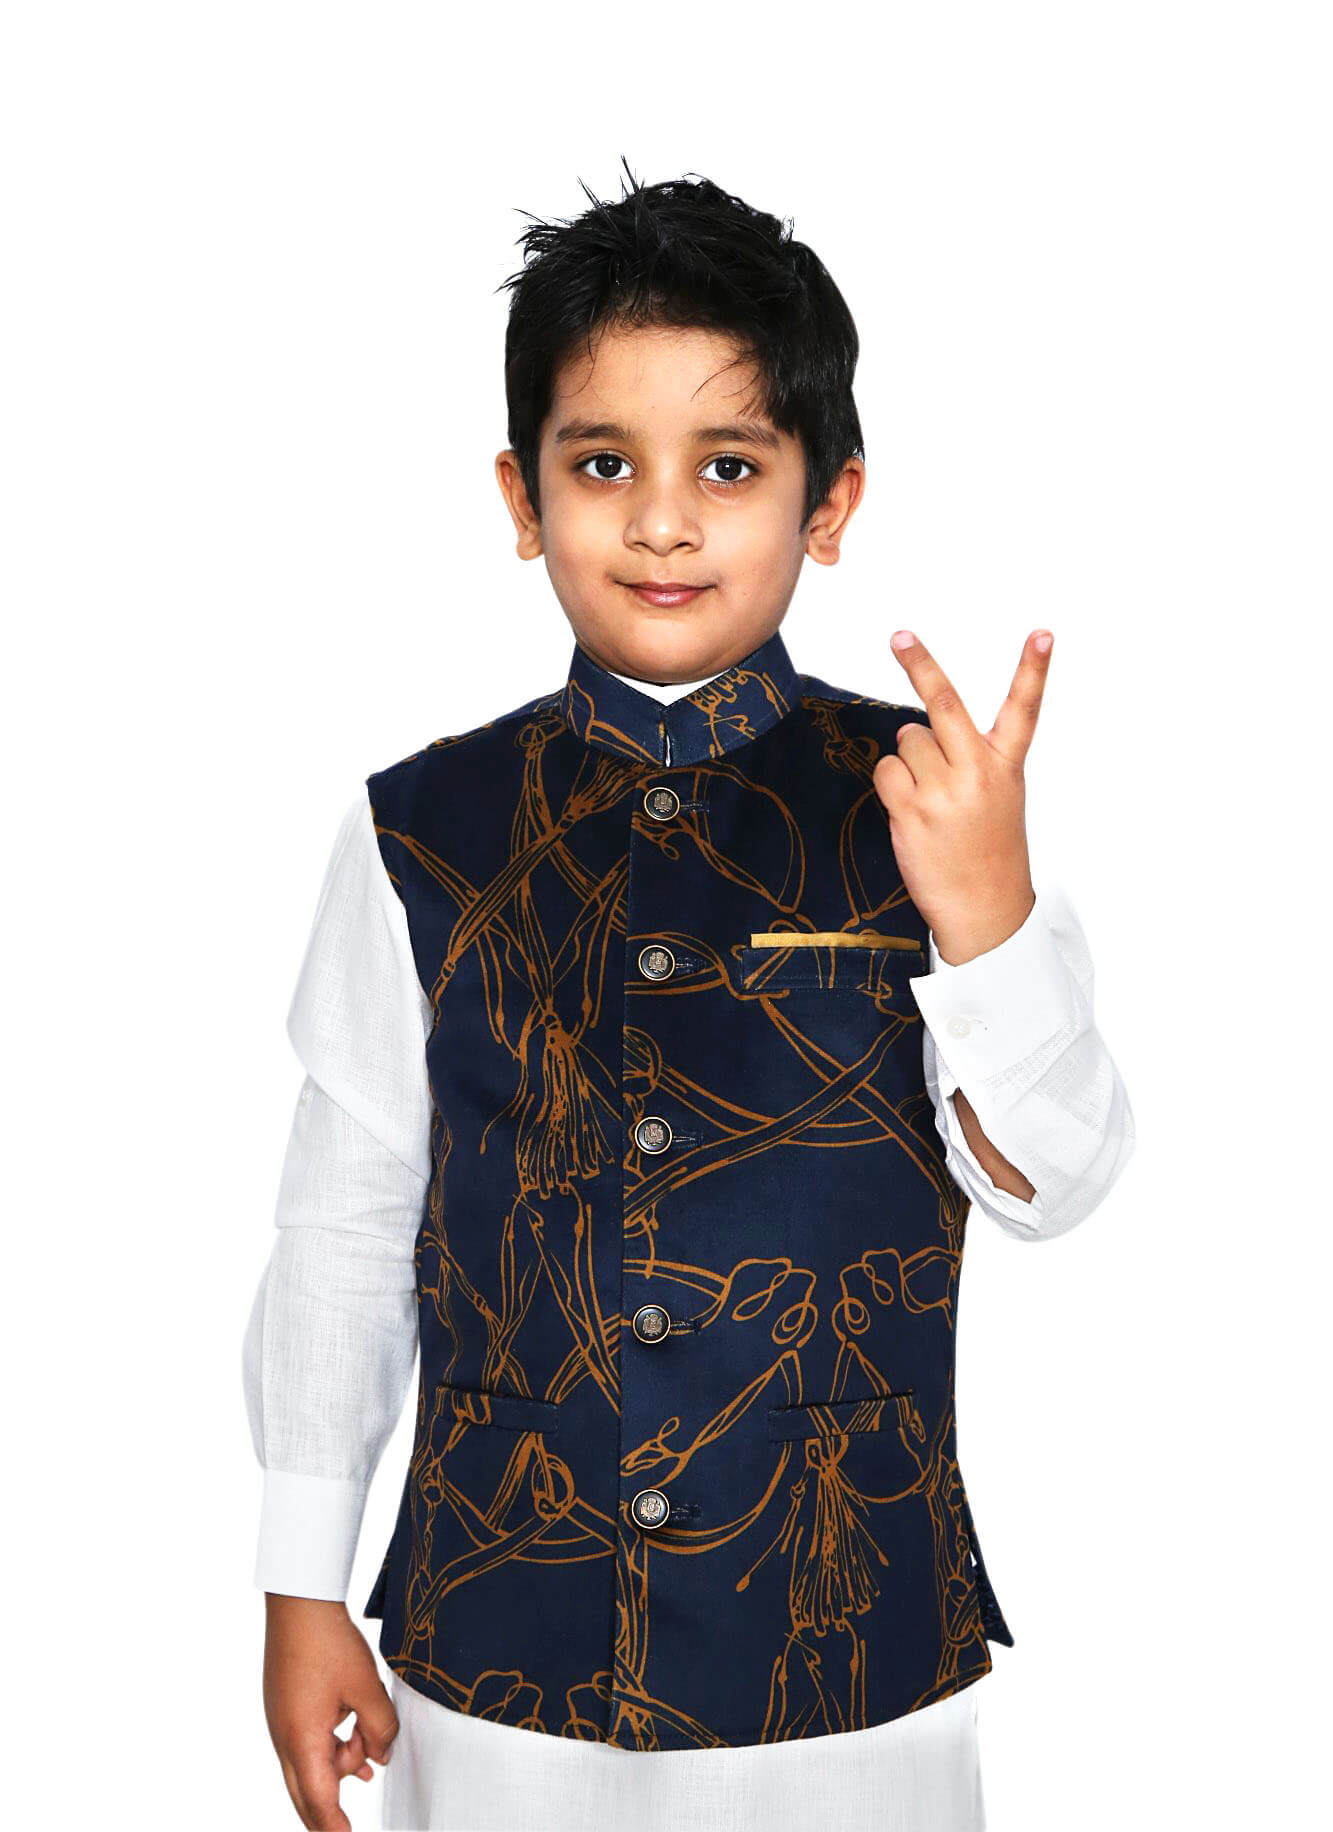 Boys Suit For Wedding Kids Tuxedo Child Formal Blazer Jacket Pants Vest Set  Custom Children Clothes For 3 16 Years Old From Yawen905386839, $71.35 |  DHgate.Com